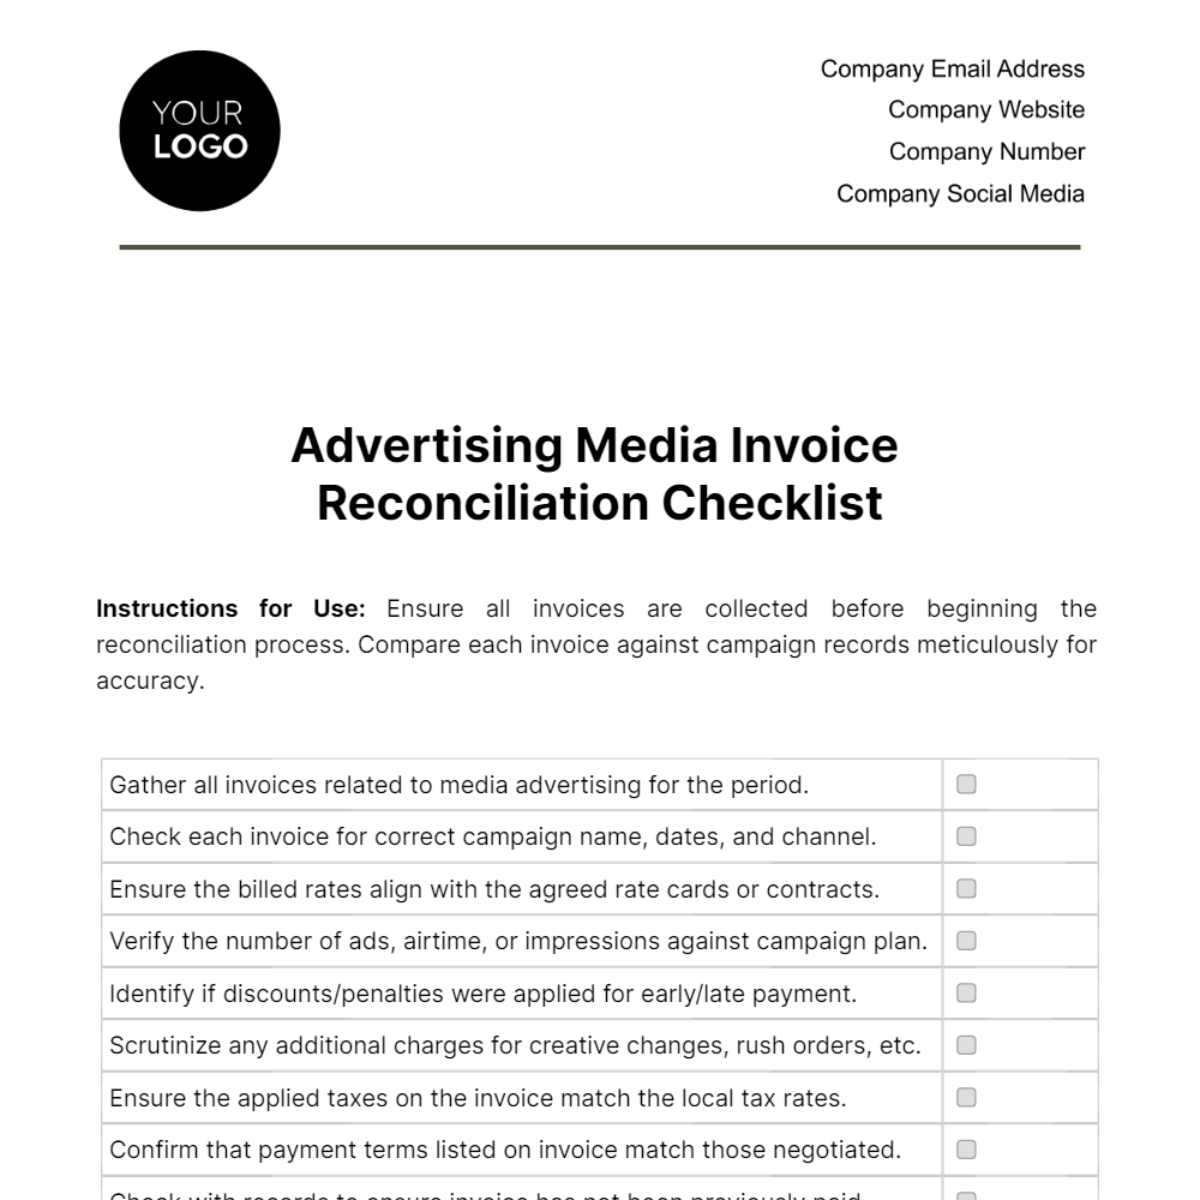 Advertising Media Invoice Reconciliation Checklist Template